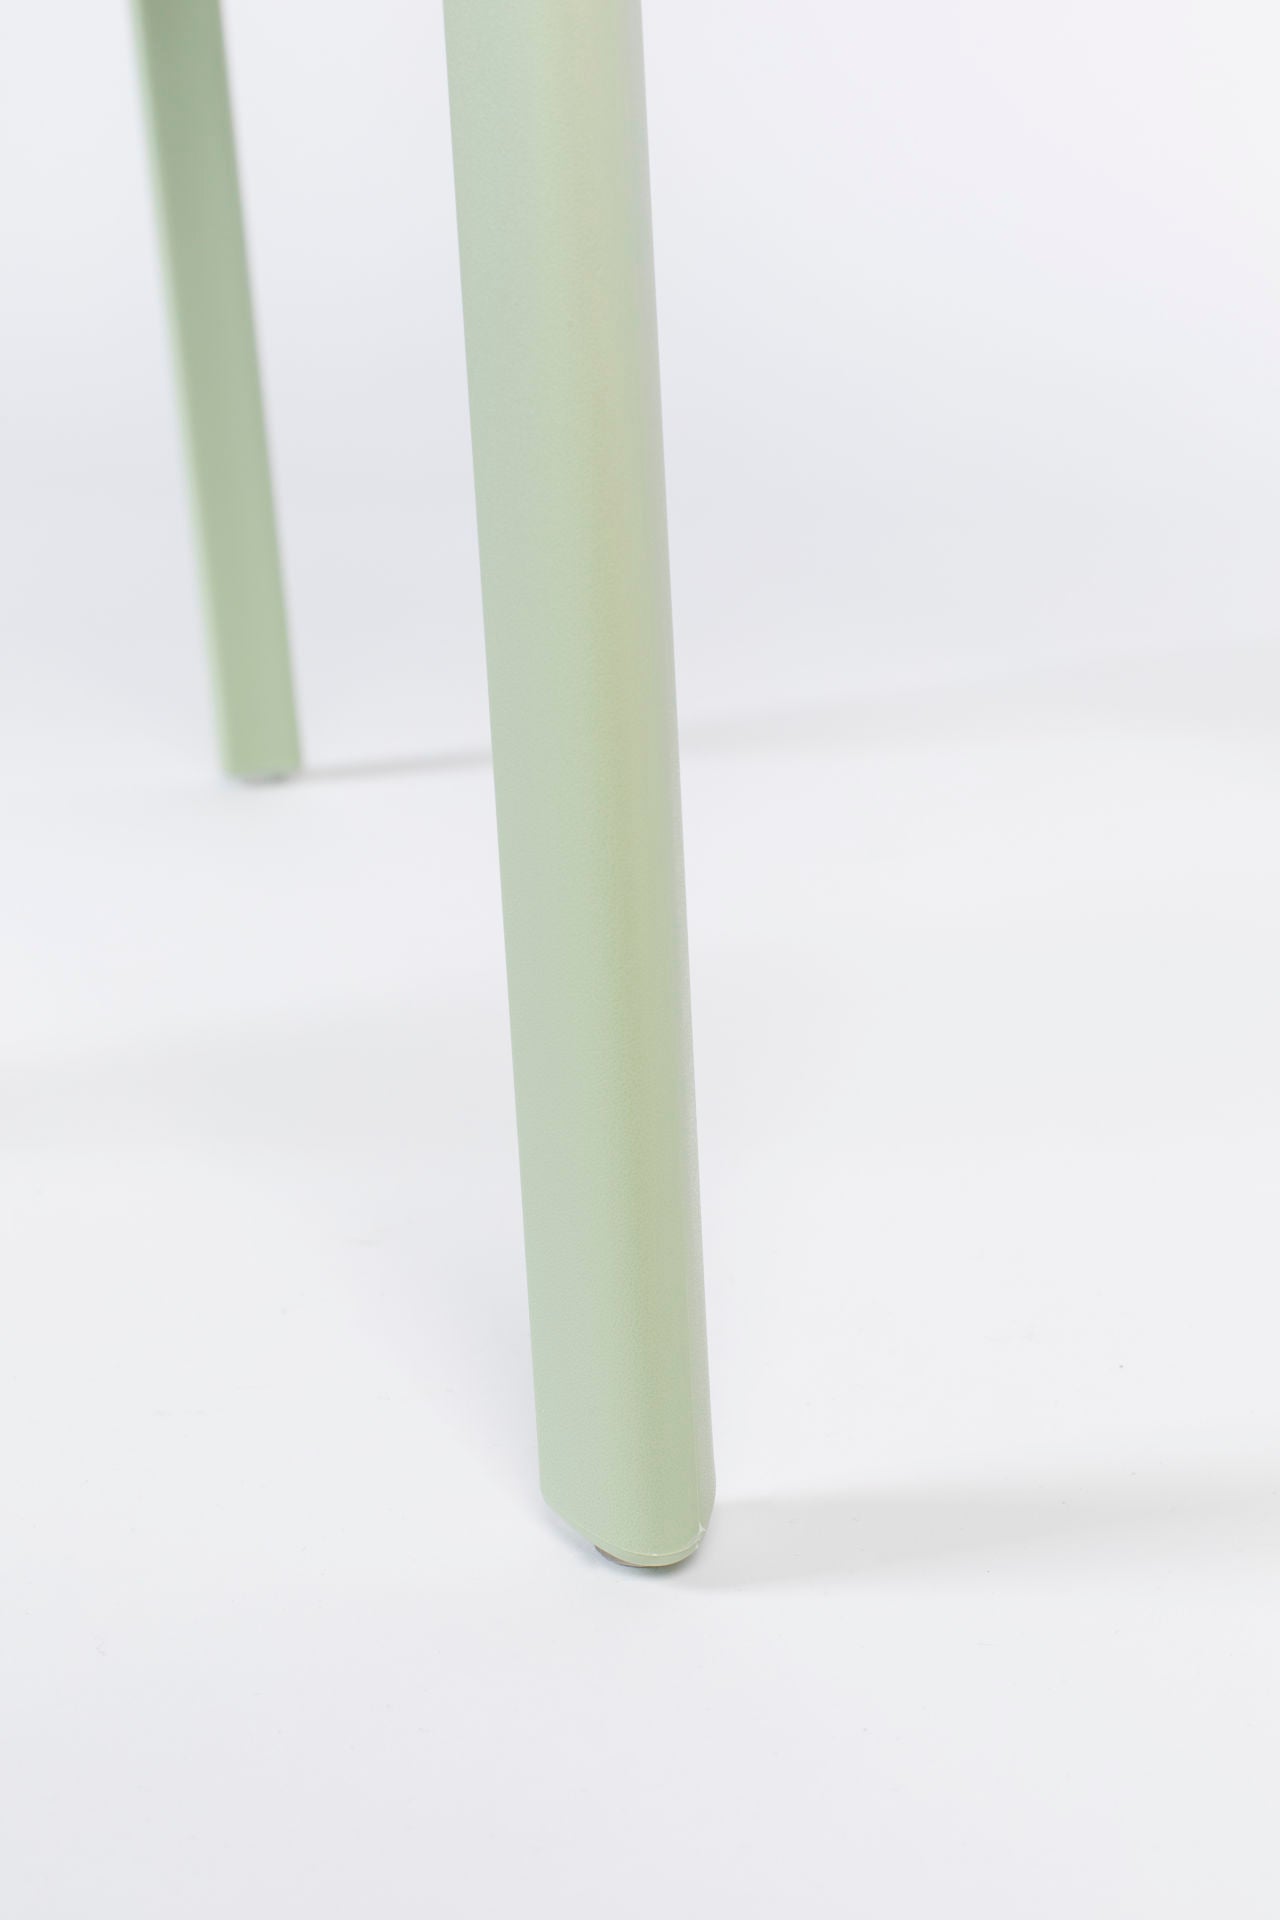 Nancy's Farmville Chair - Retro - Green - Polypropylene, Plastic - 47 cm x 48 cm x 94 cm